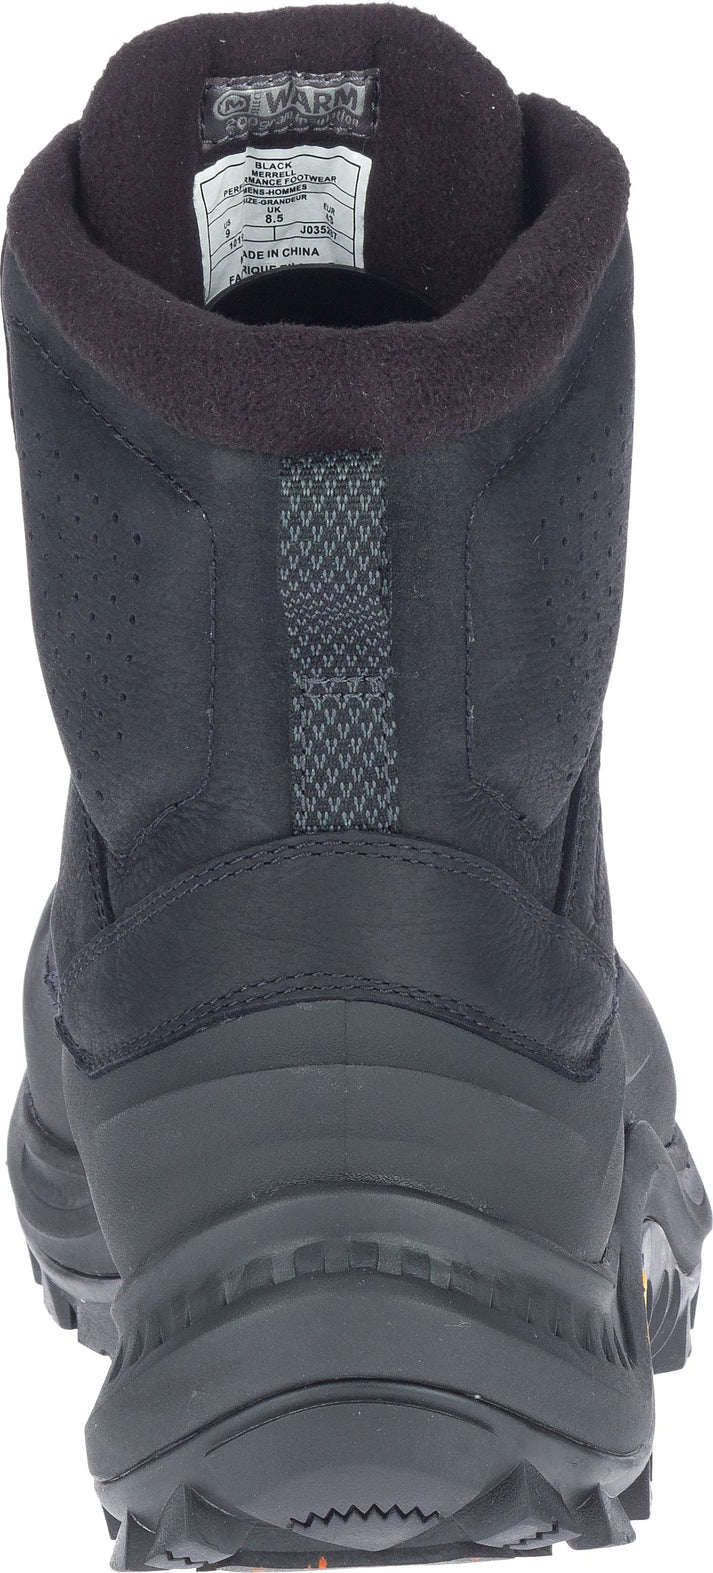 Merrell Boots Thermo Overlook 2 Mid Waterproof Black